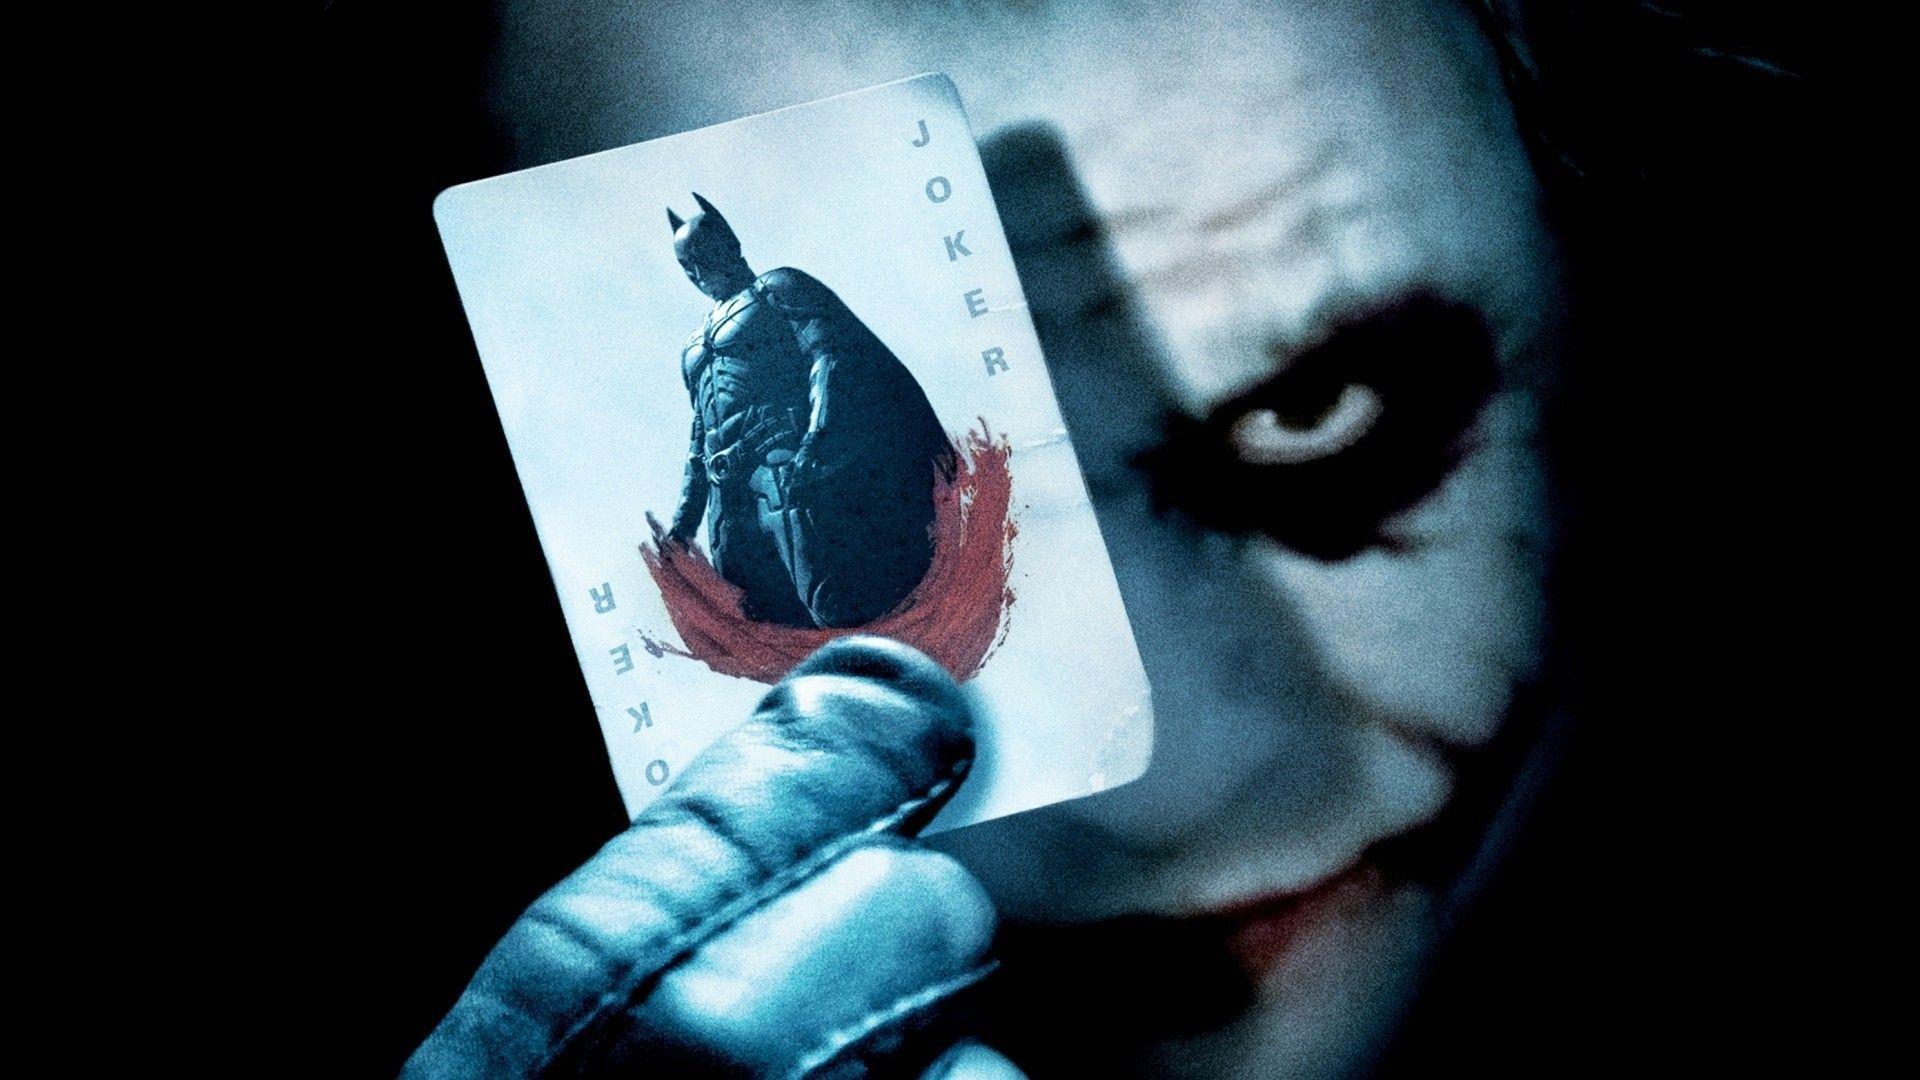 Batman Joker Card HD Free 3D Desktop Wallpaper Picture Download